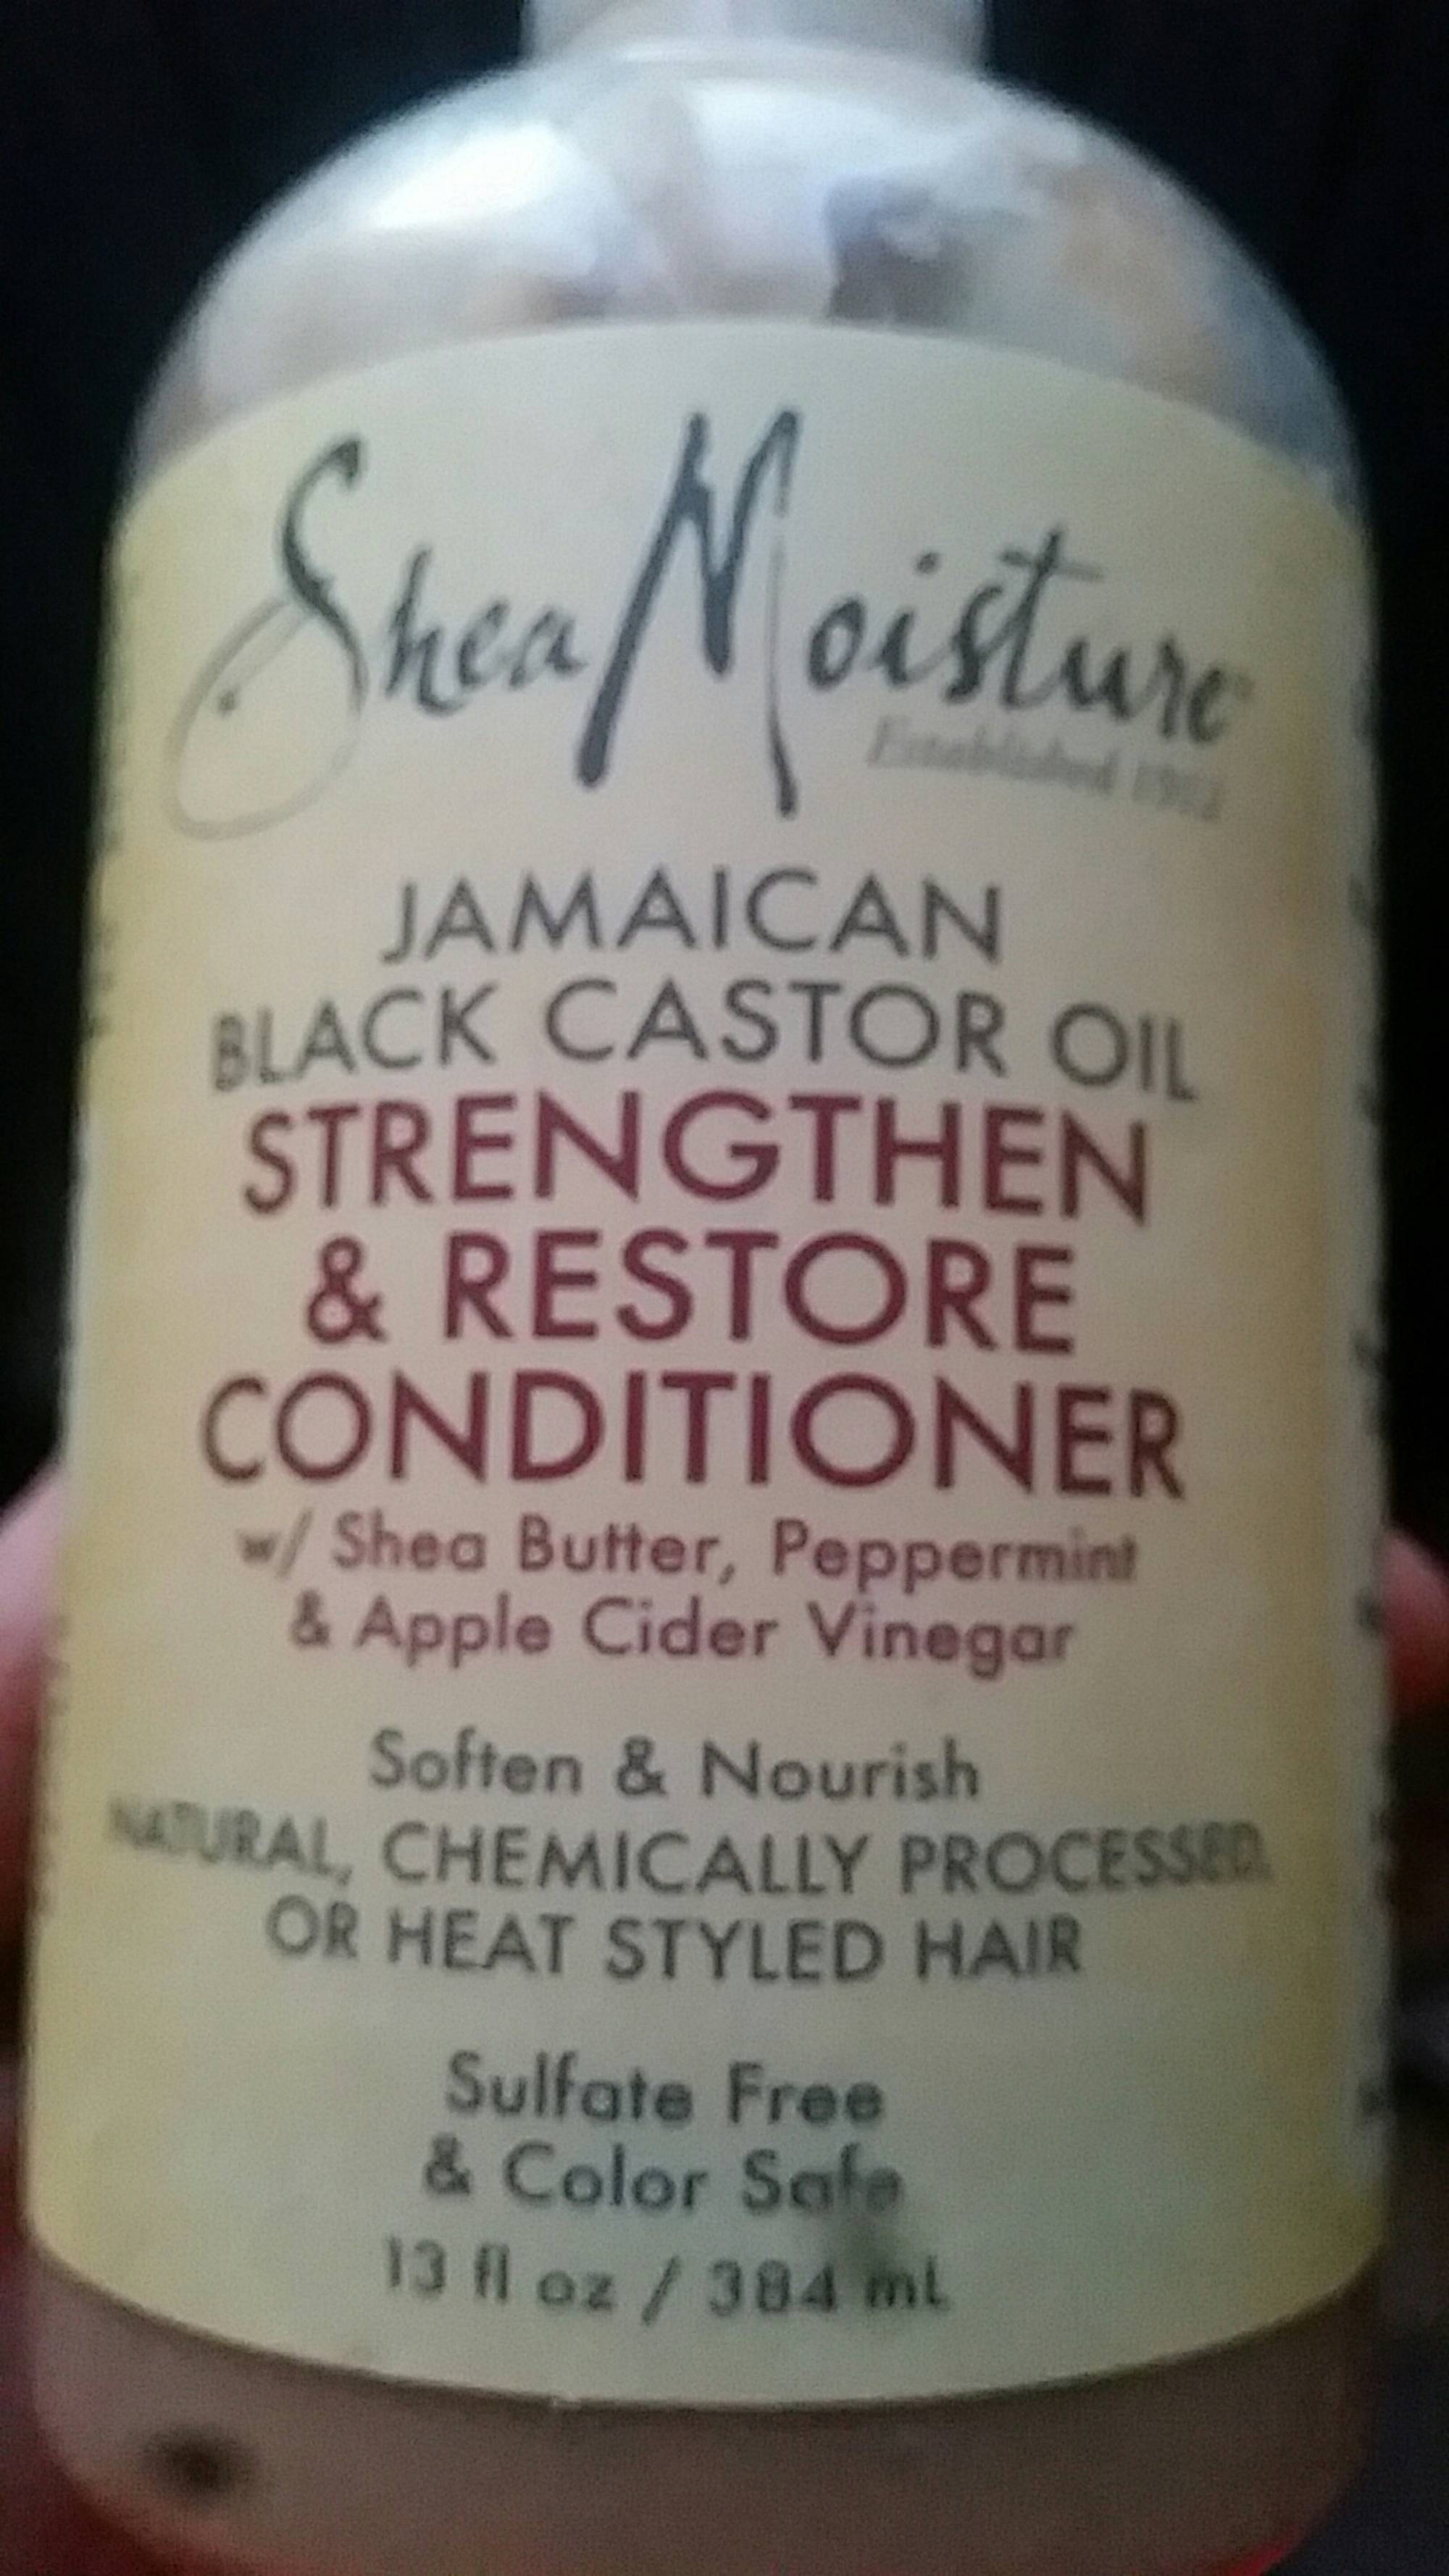 SHEA MOISTURE - Jamaican black castor oil - Strengthen & restore conditioner